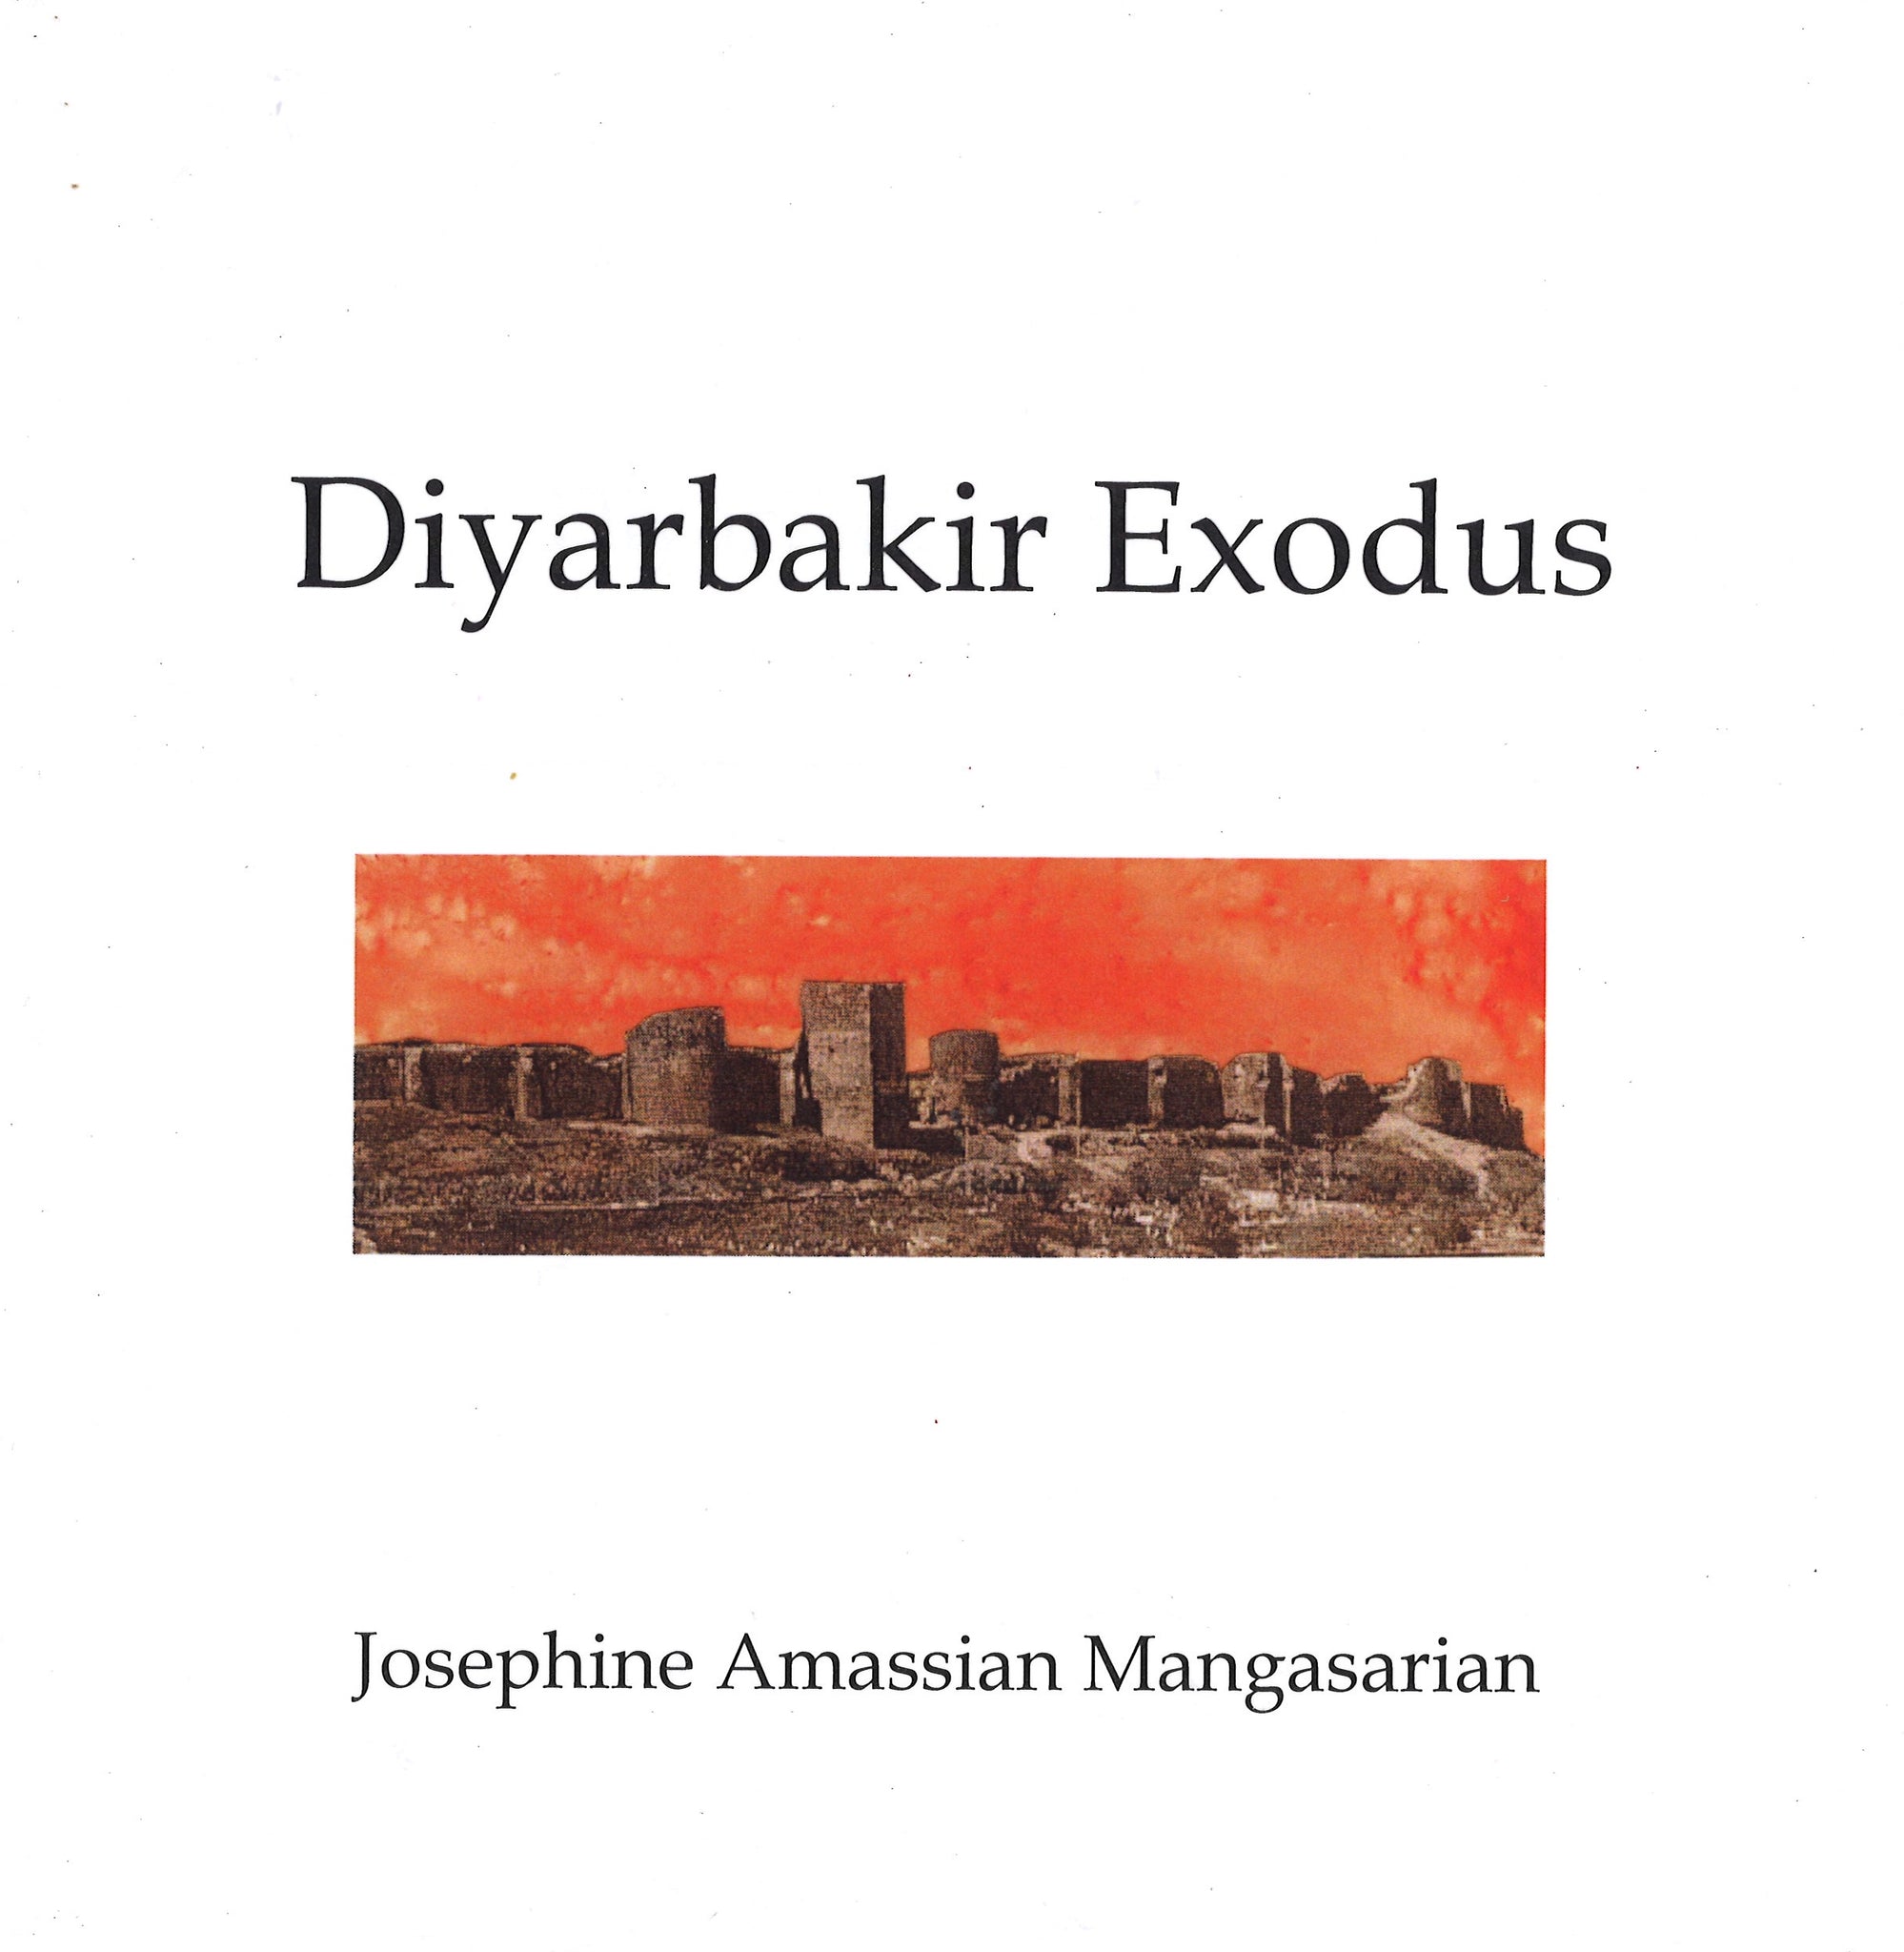 DIYARBAKIR EXODUS: A Memoir of 3 Families